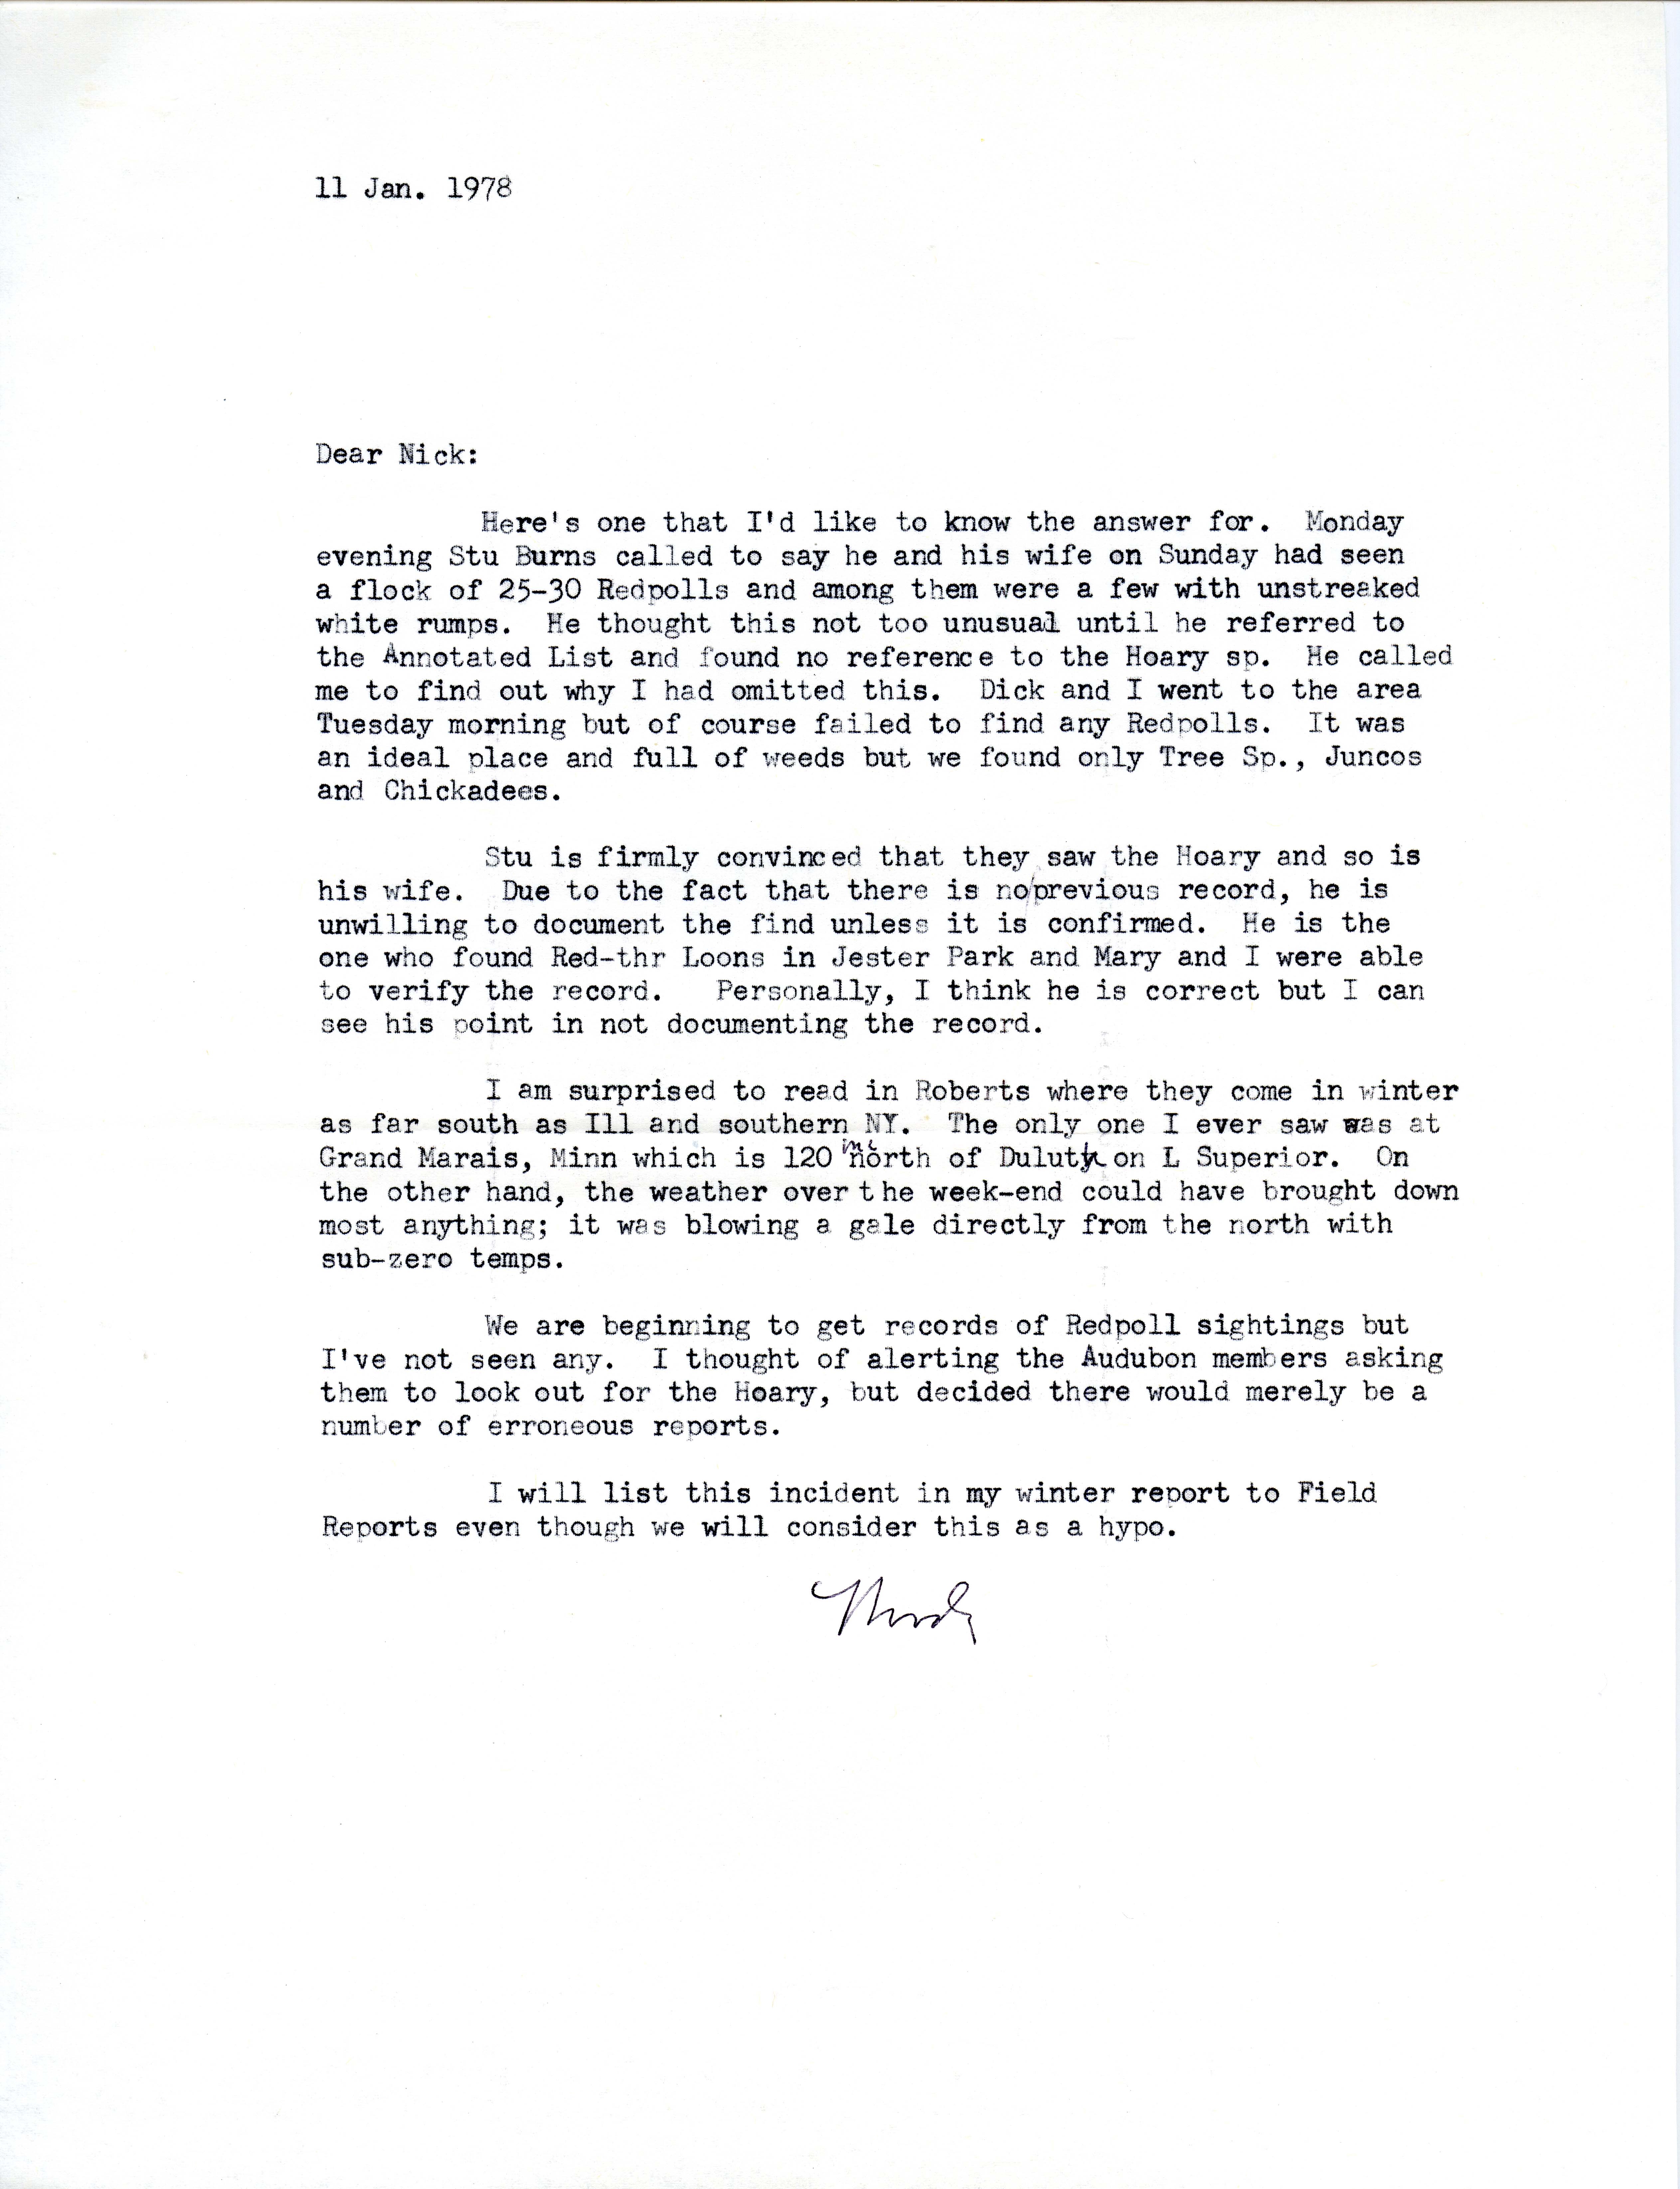 Woodward H. Brown letter to Nicholas S. Halmi regarding bird sightings, January 11, 1978